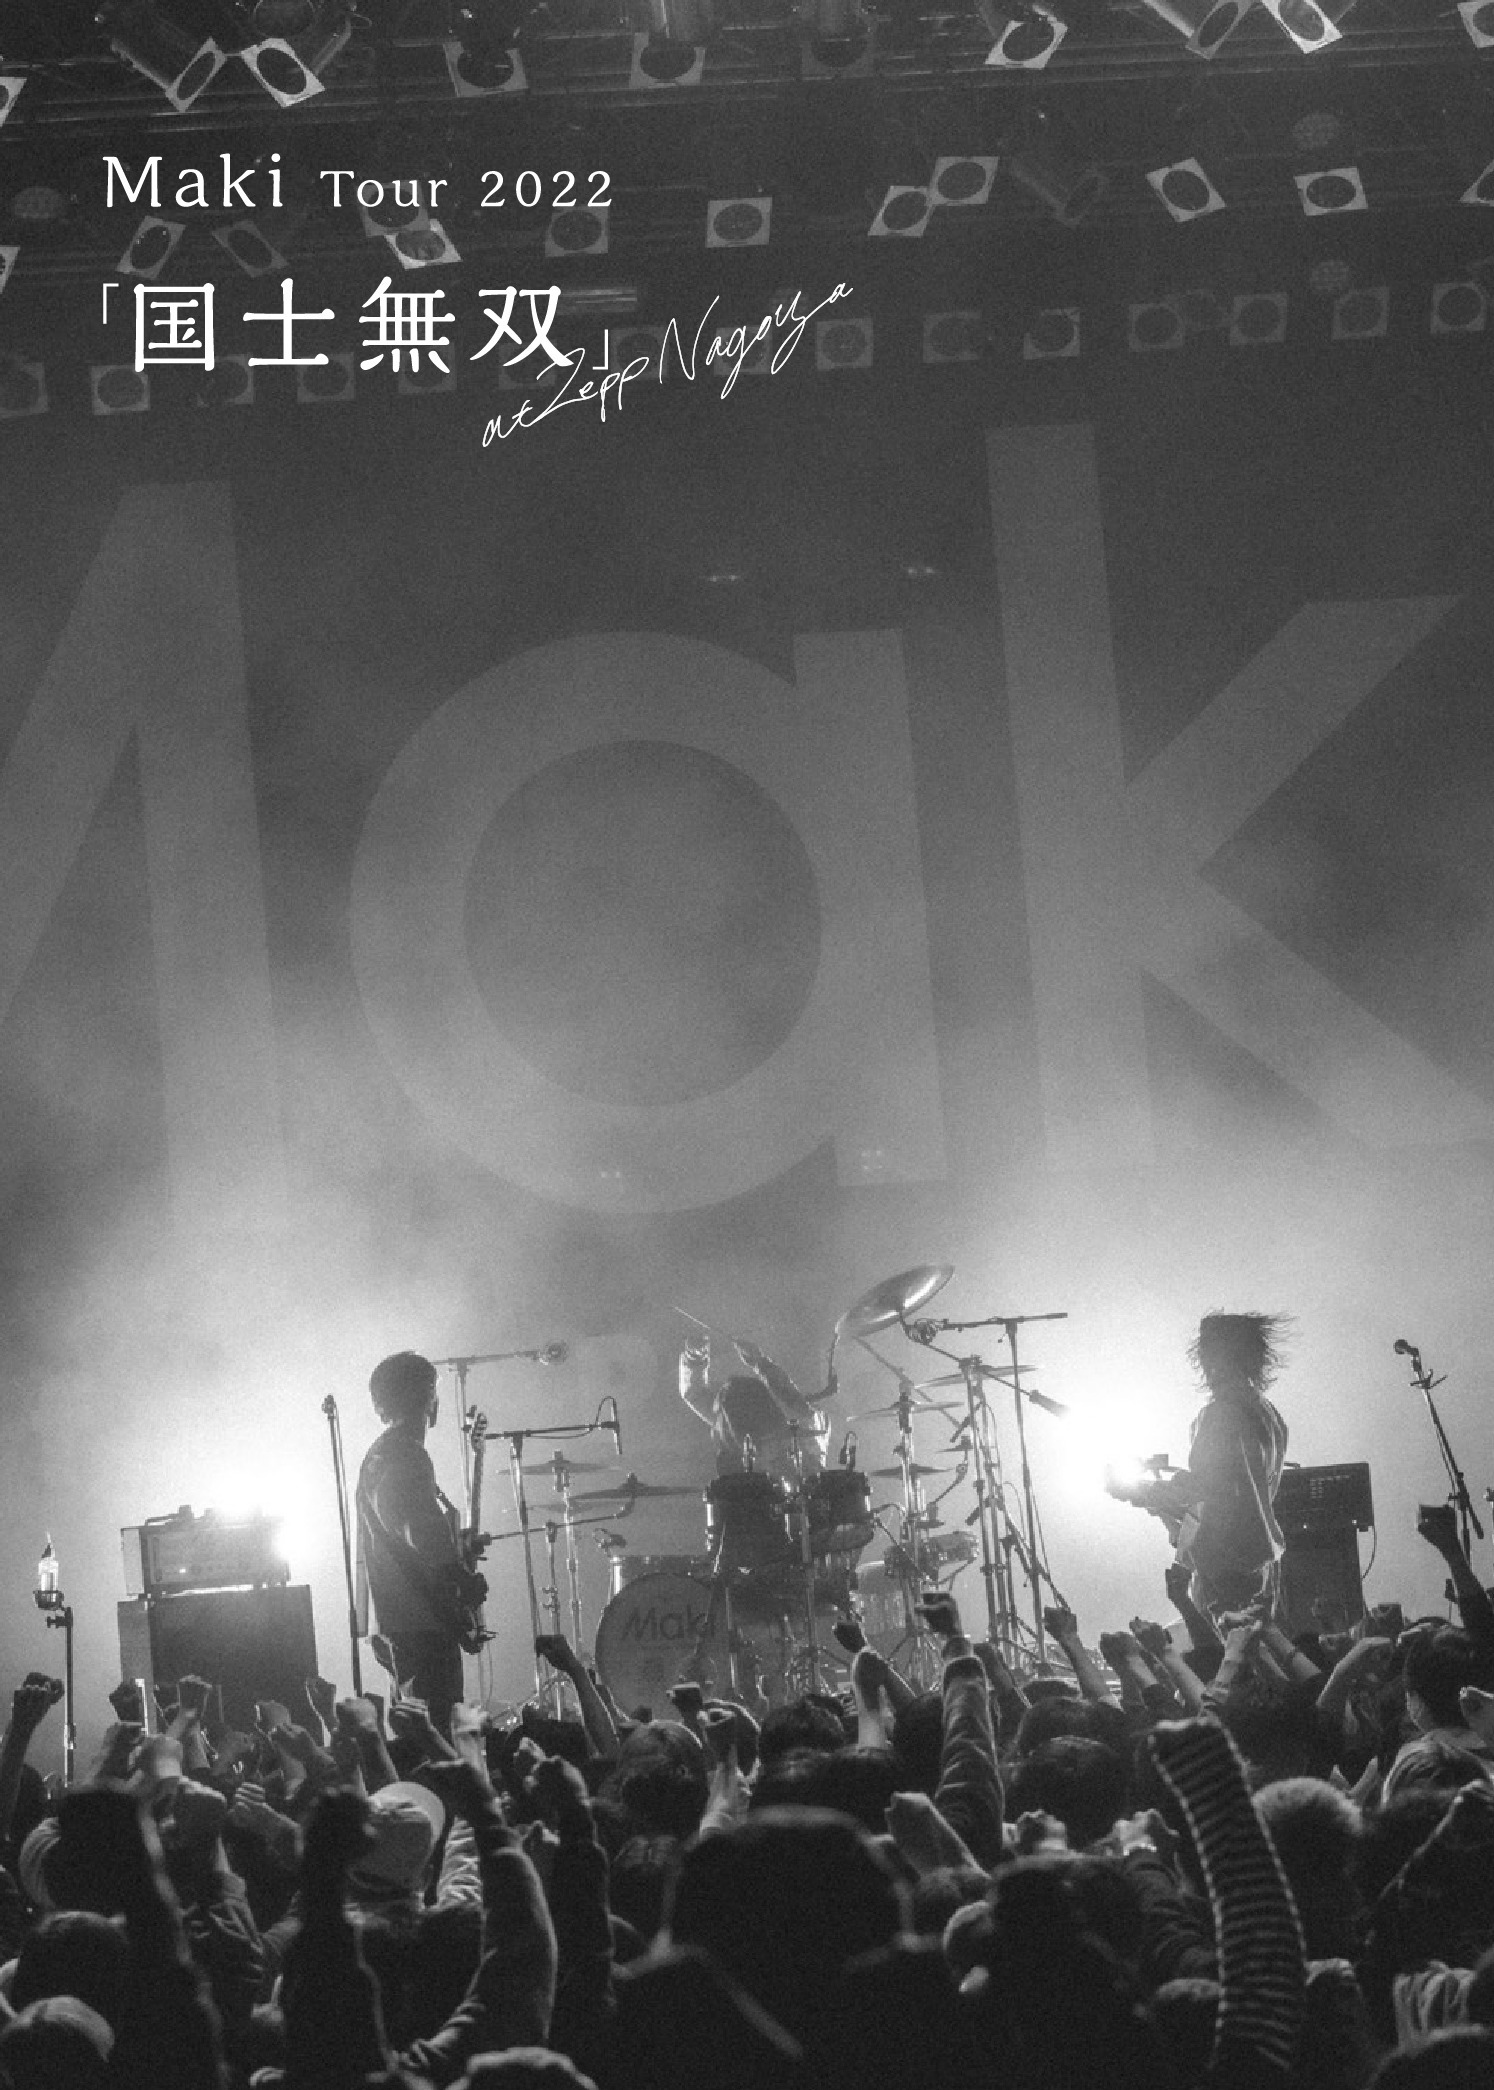 Maki Tour 2022「国士無双」at Zepp Nagoya（DVD）